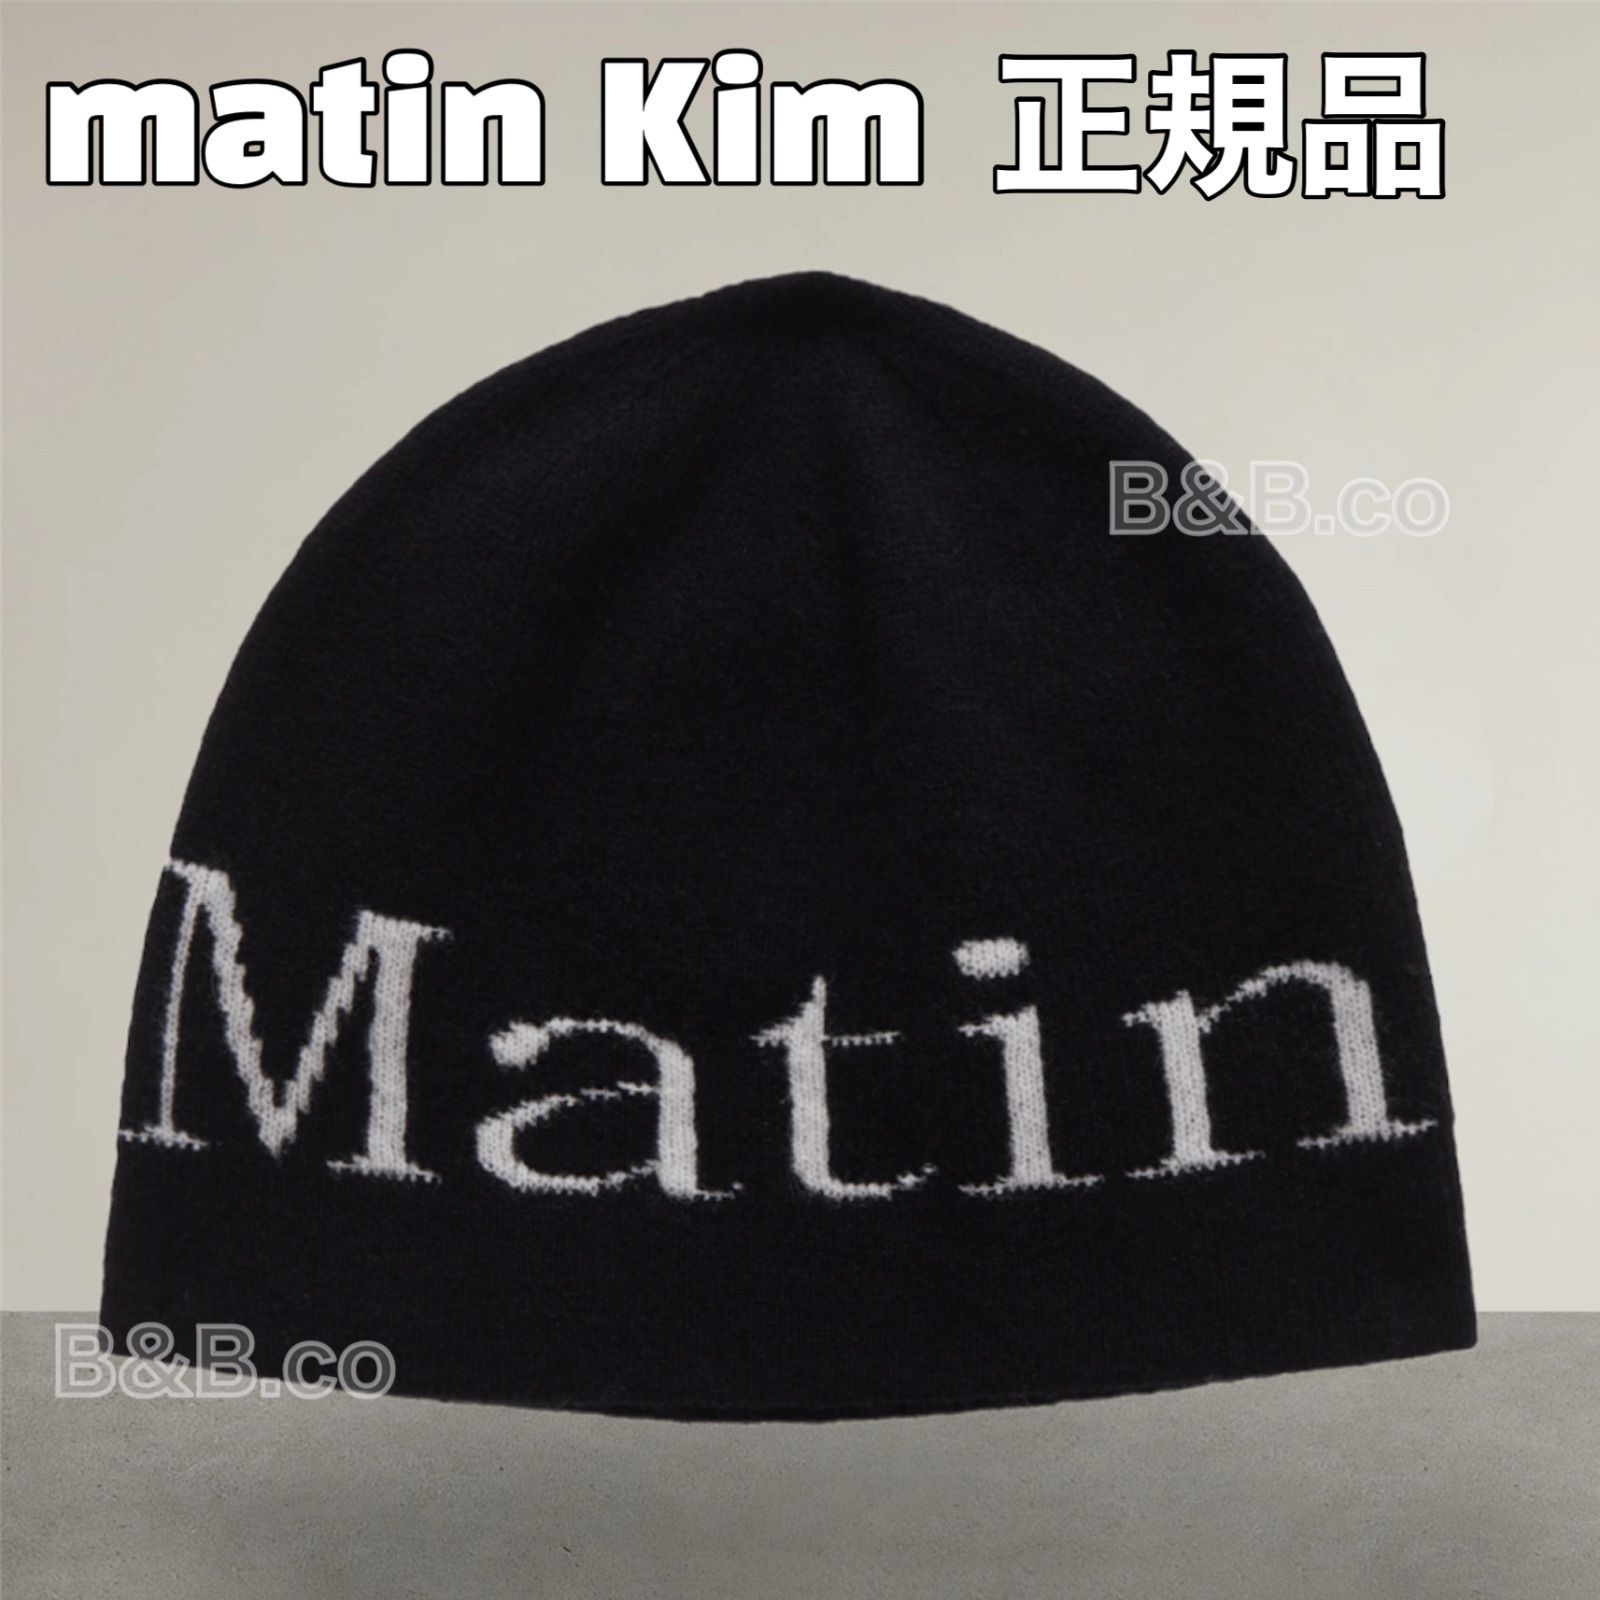 Martin Kim マーティンキム 公式 ニット帽 ビーニー 黒 ニット